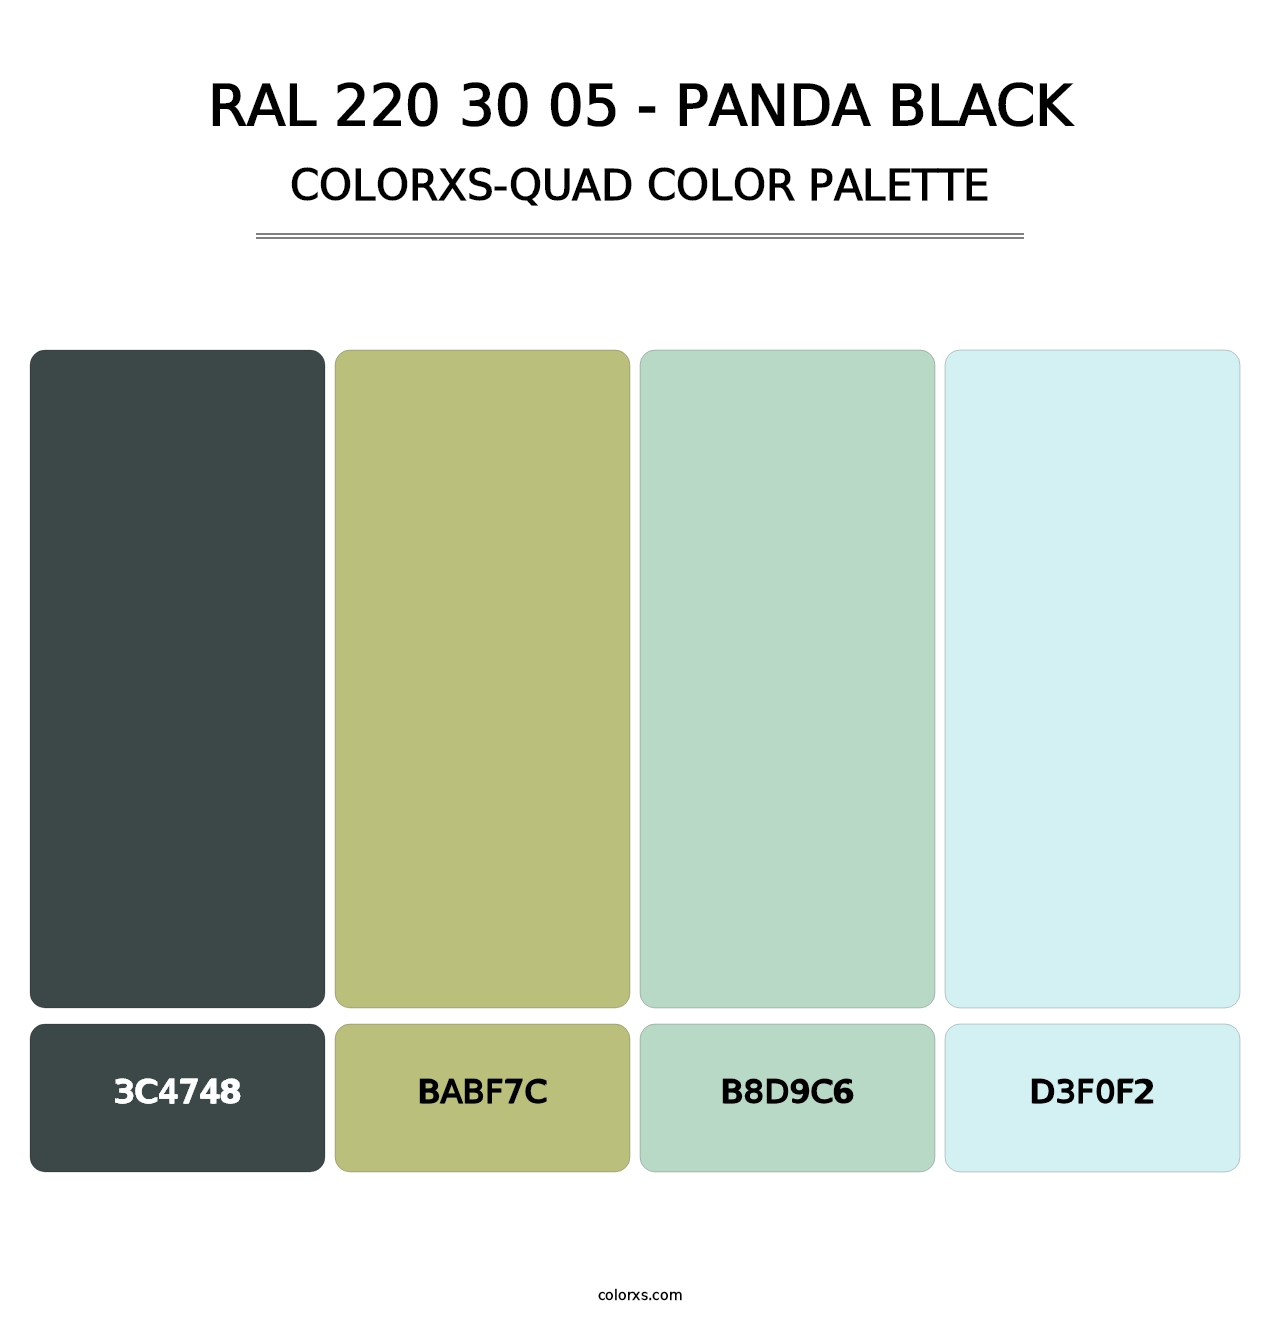 RAL 220 30 05 - Panda Black - Colorxs Quad Palette